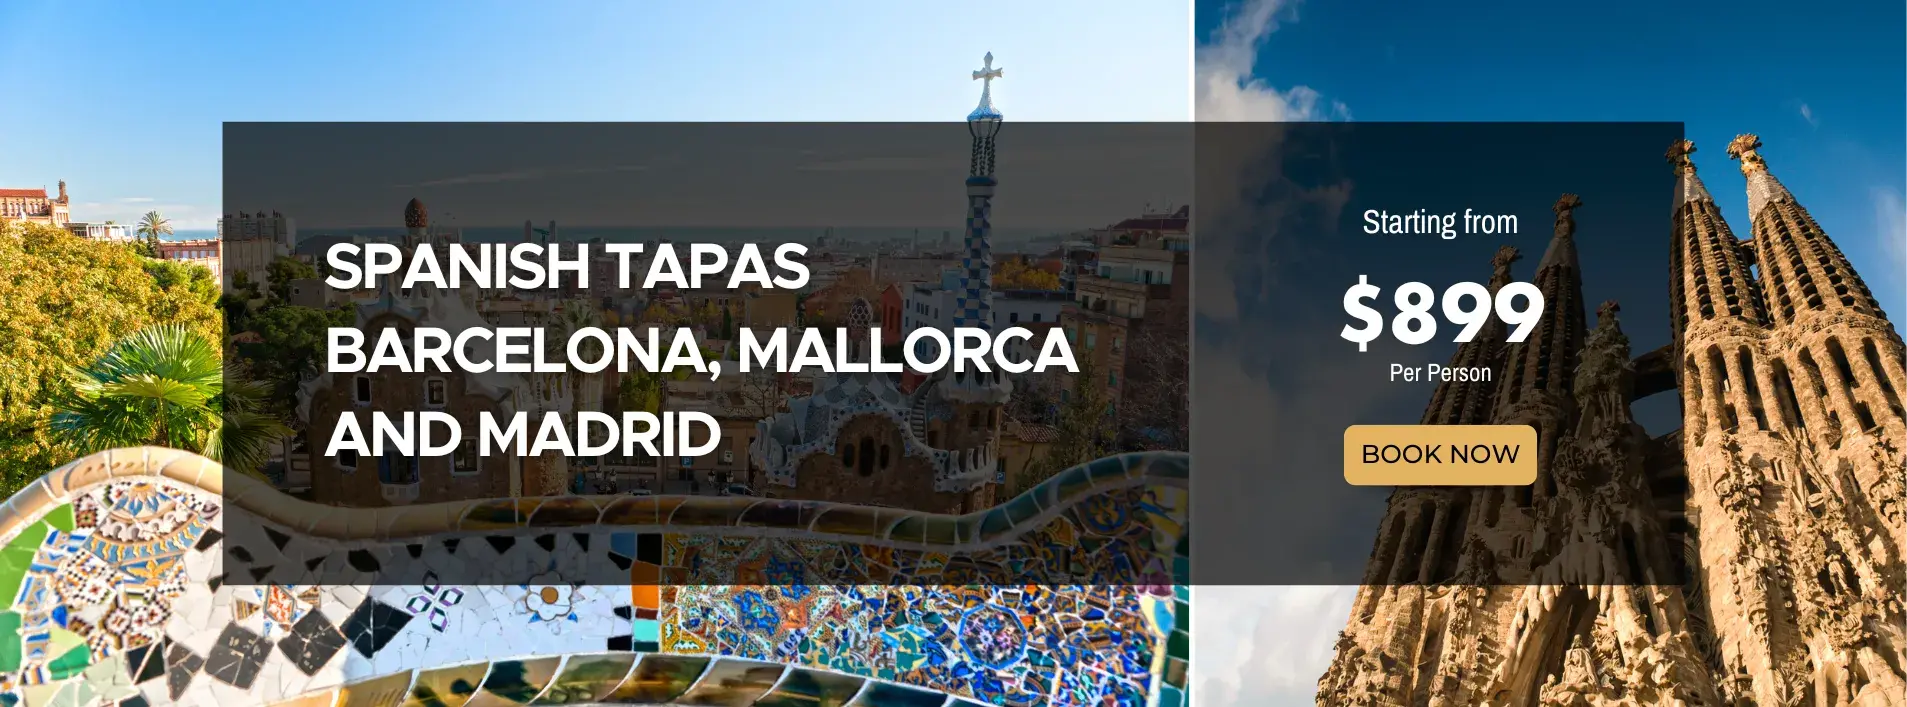 Spanish Tapas Barcelona, Mallorca and Madrid W/Air